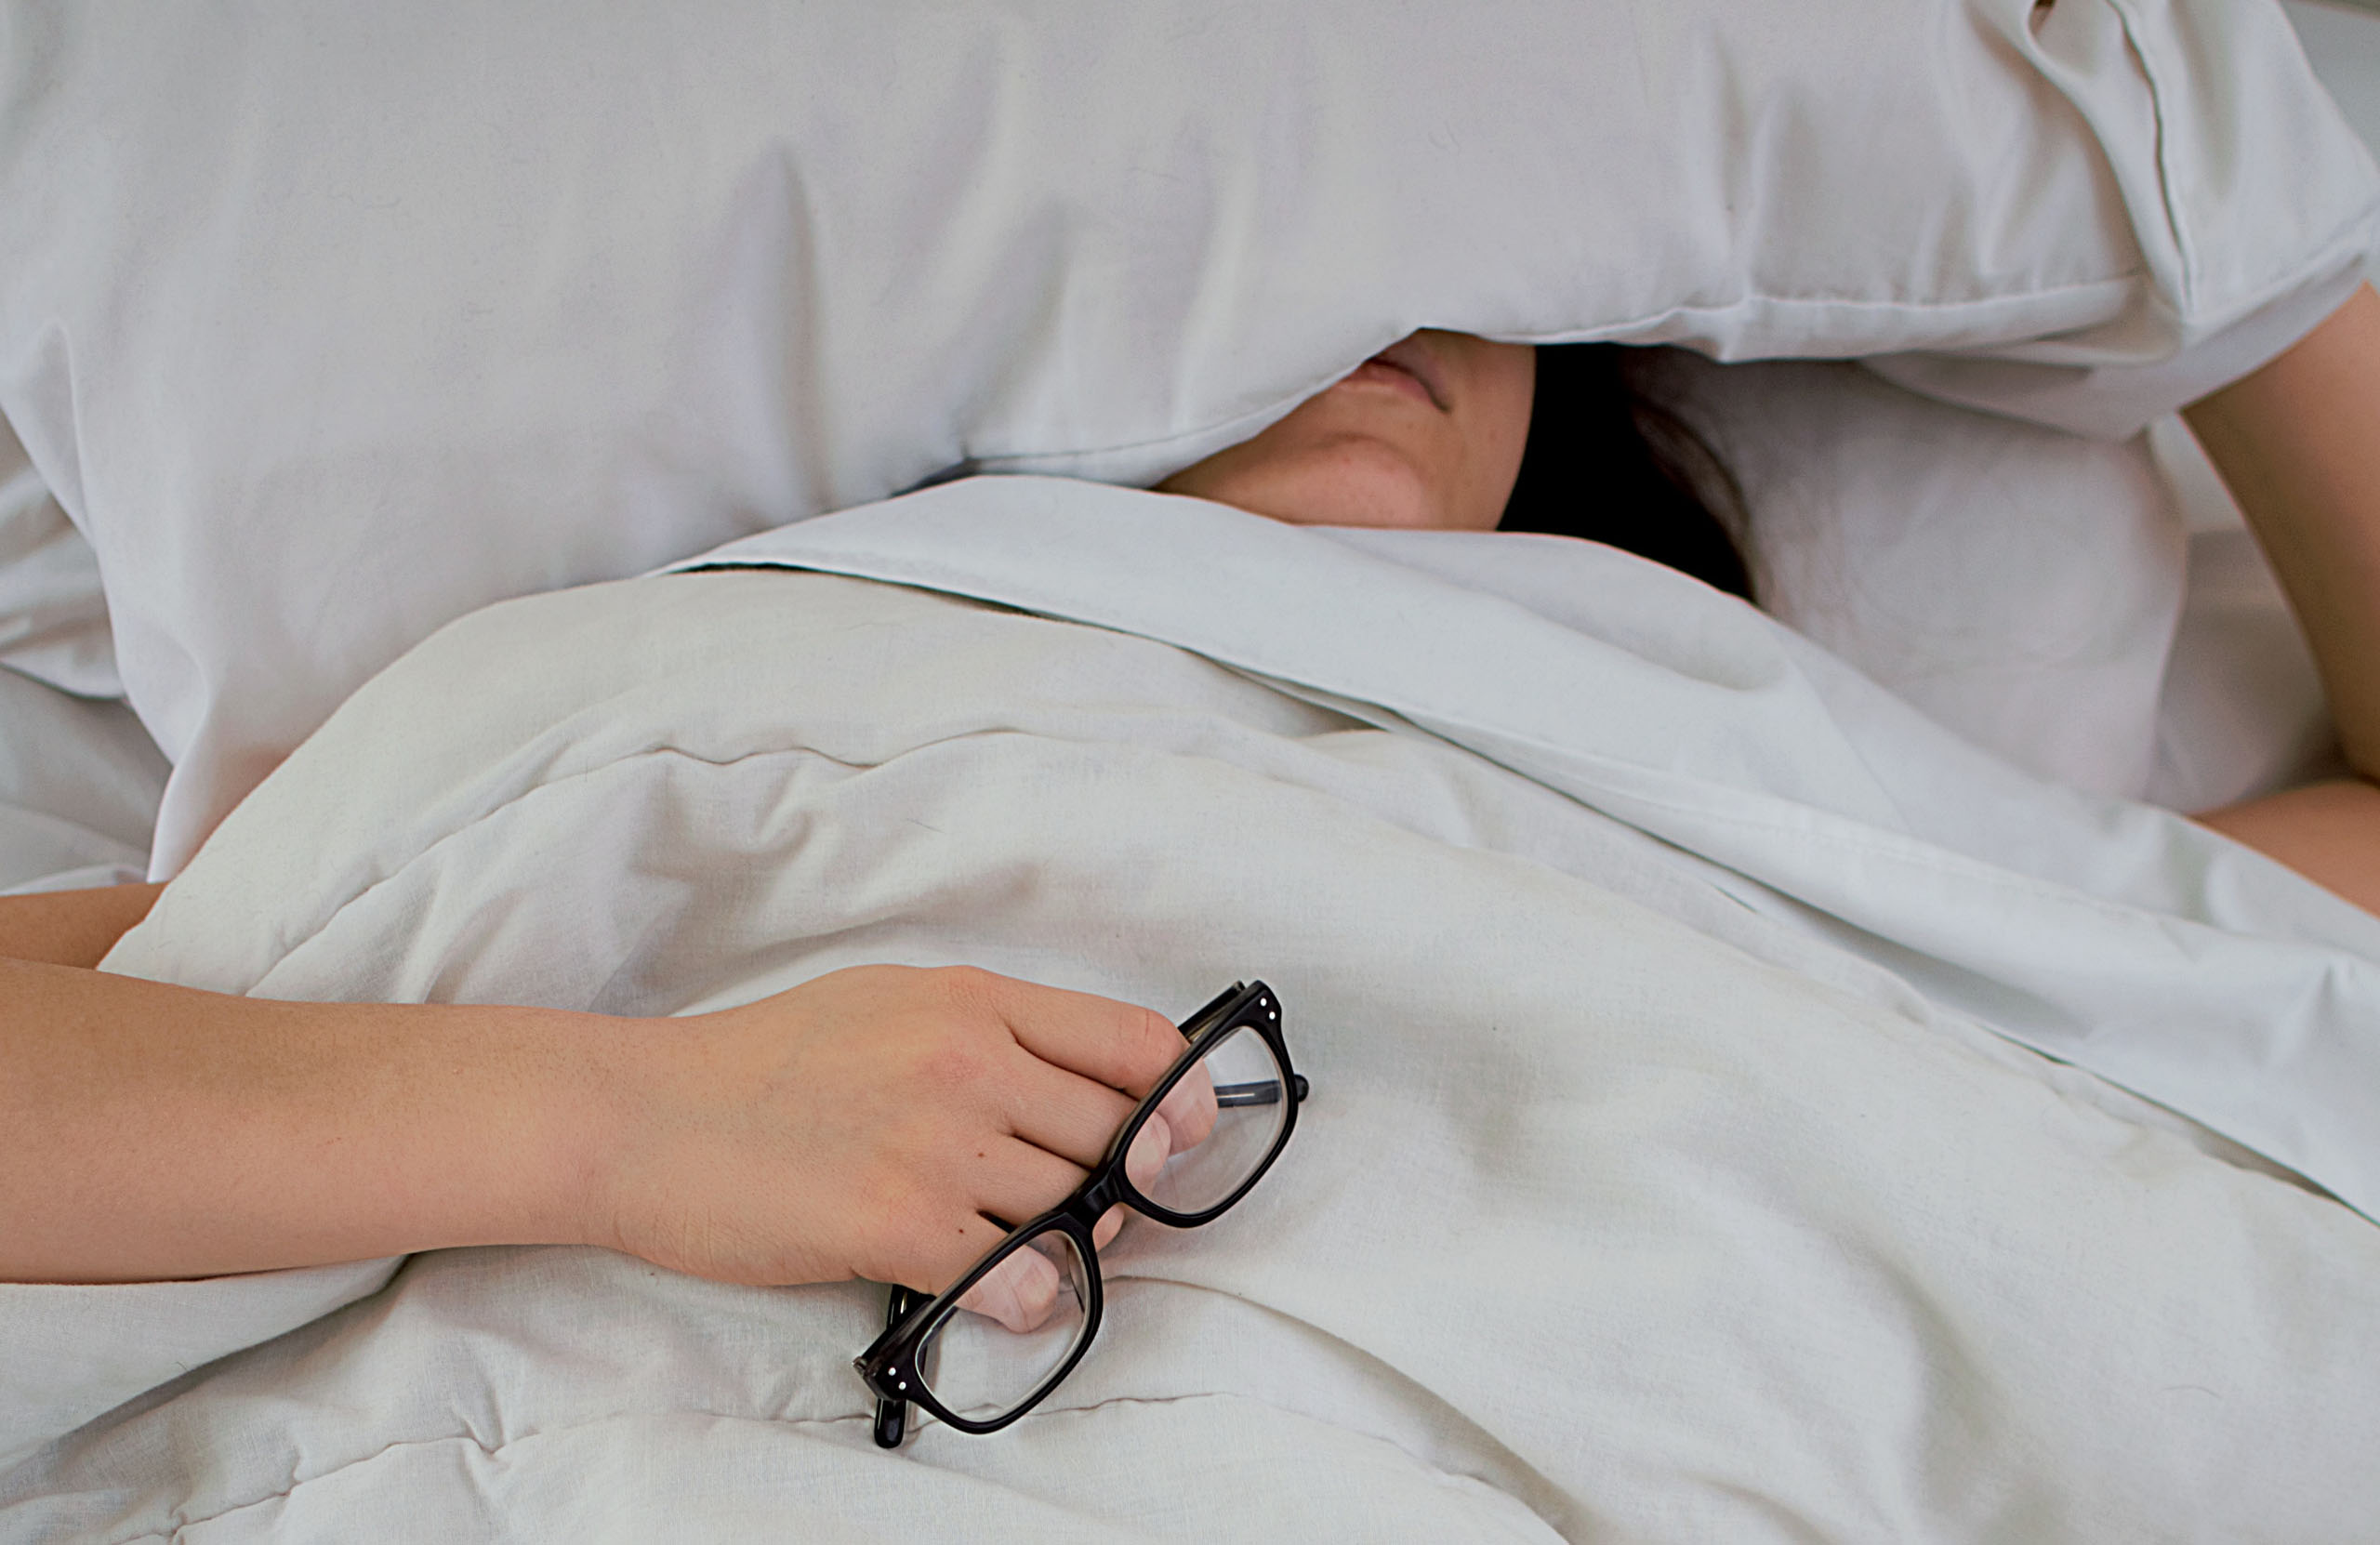 Te weinig slaap kun je inhalen. Mythe of geen mythe?